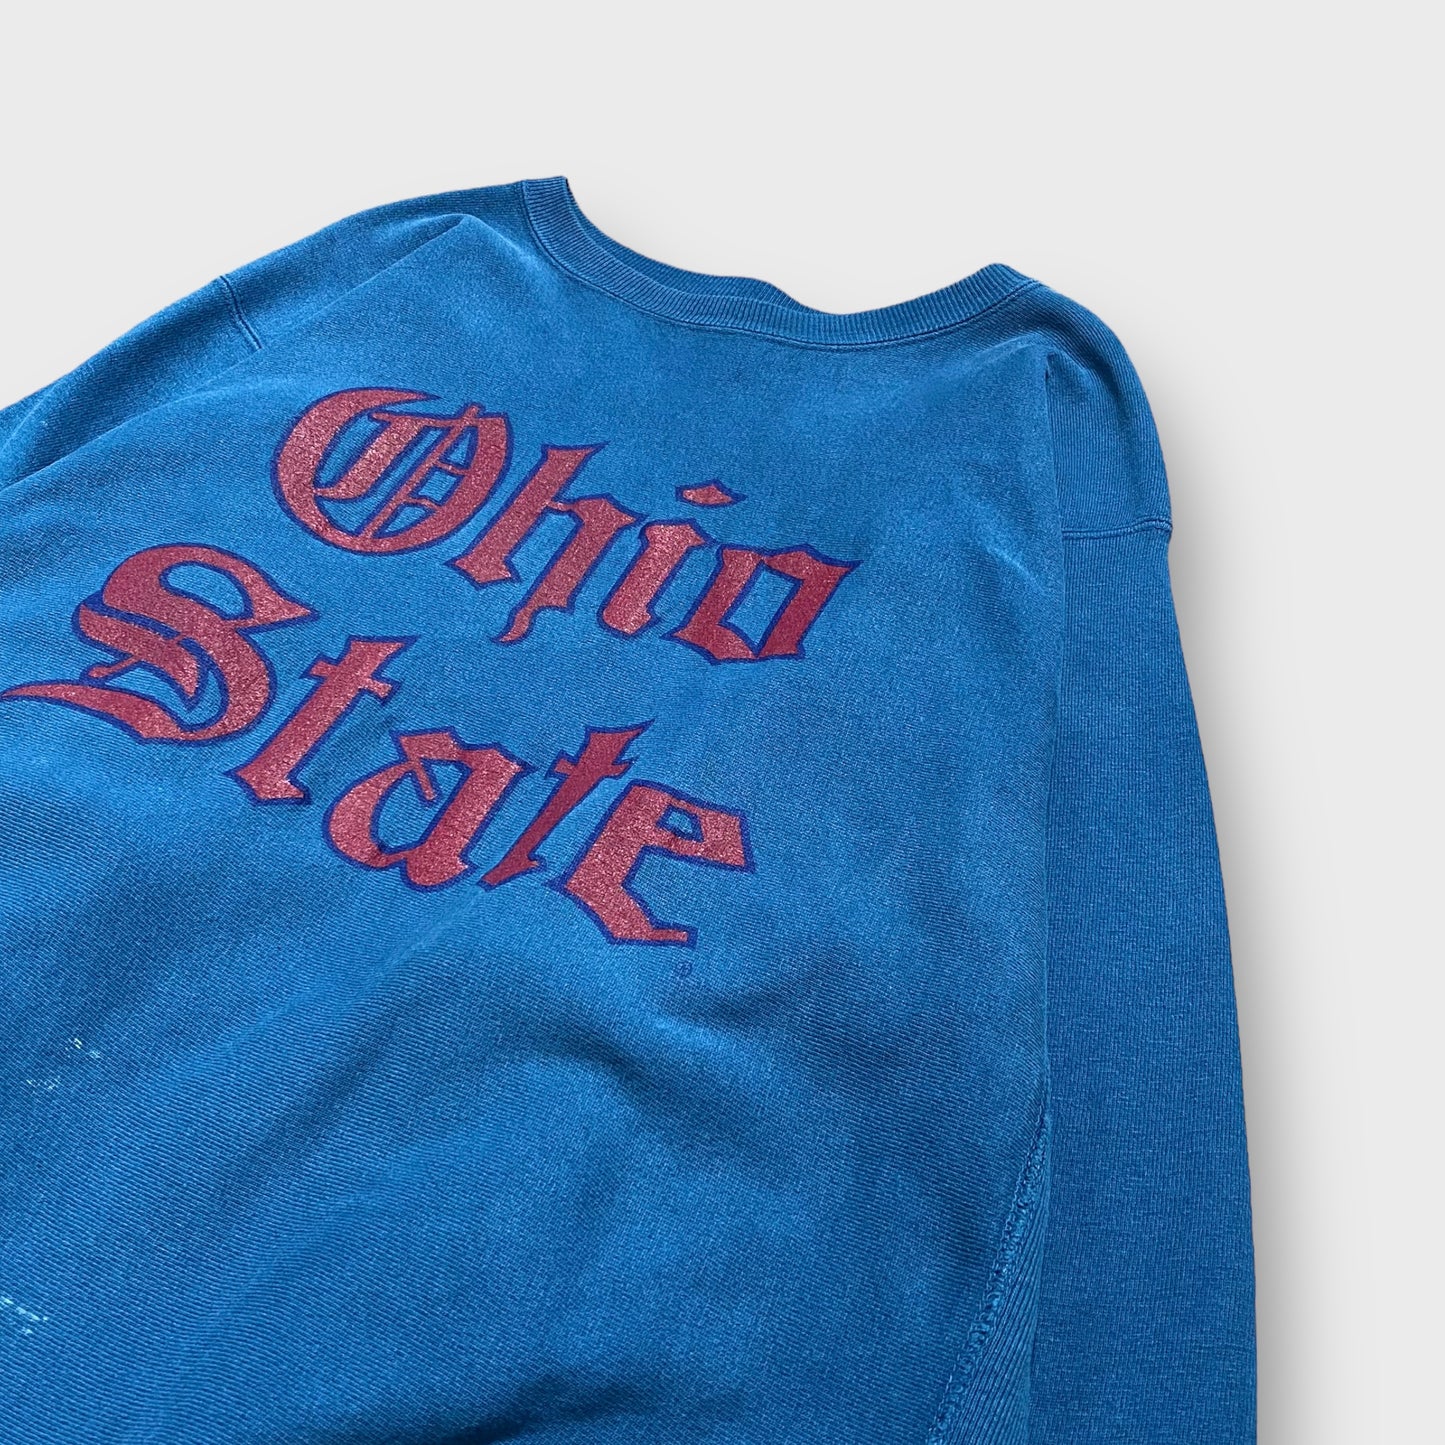 90's "Champion" Reverseweave sweat "Ohio state"